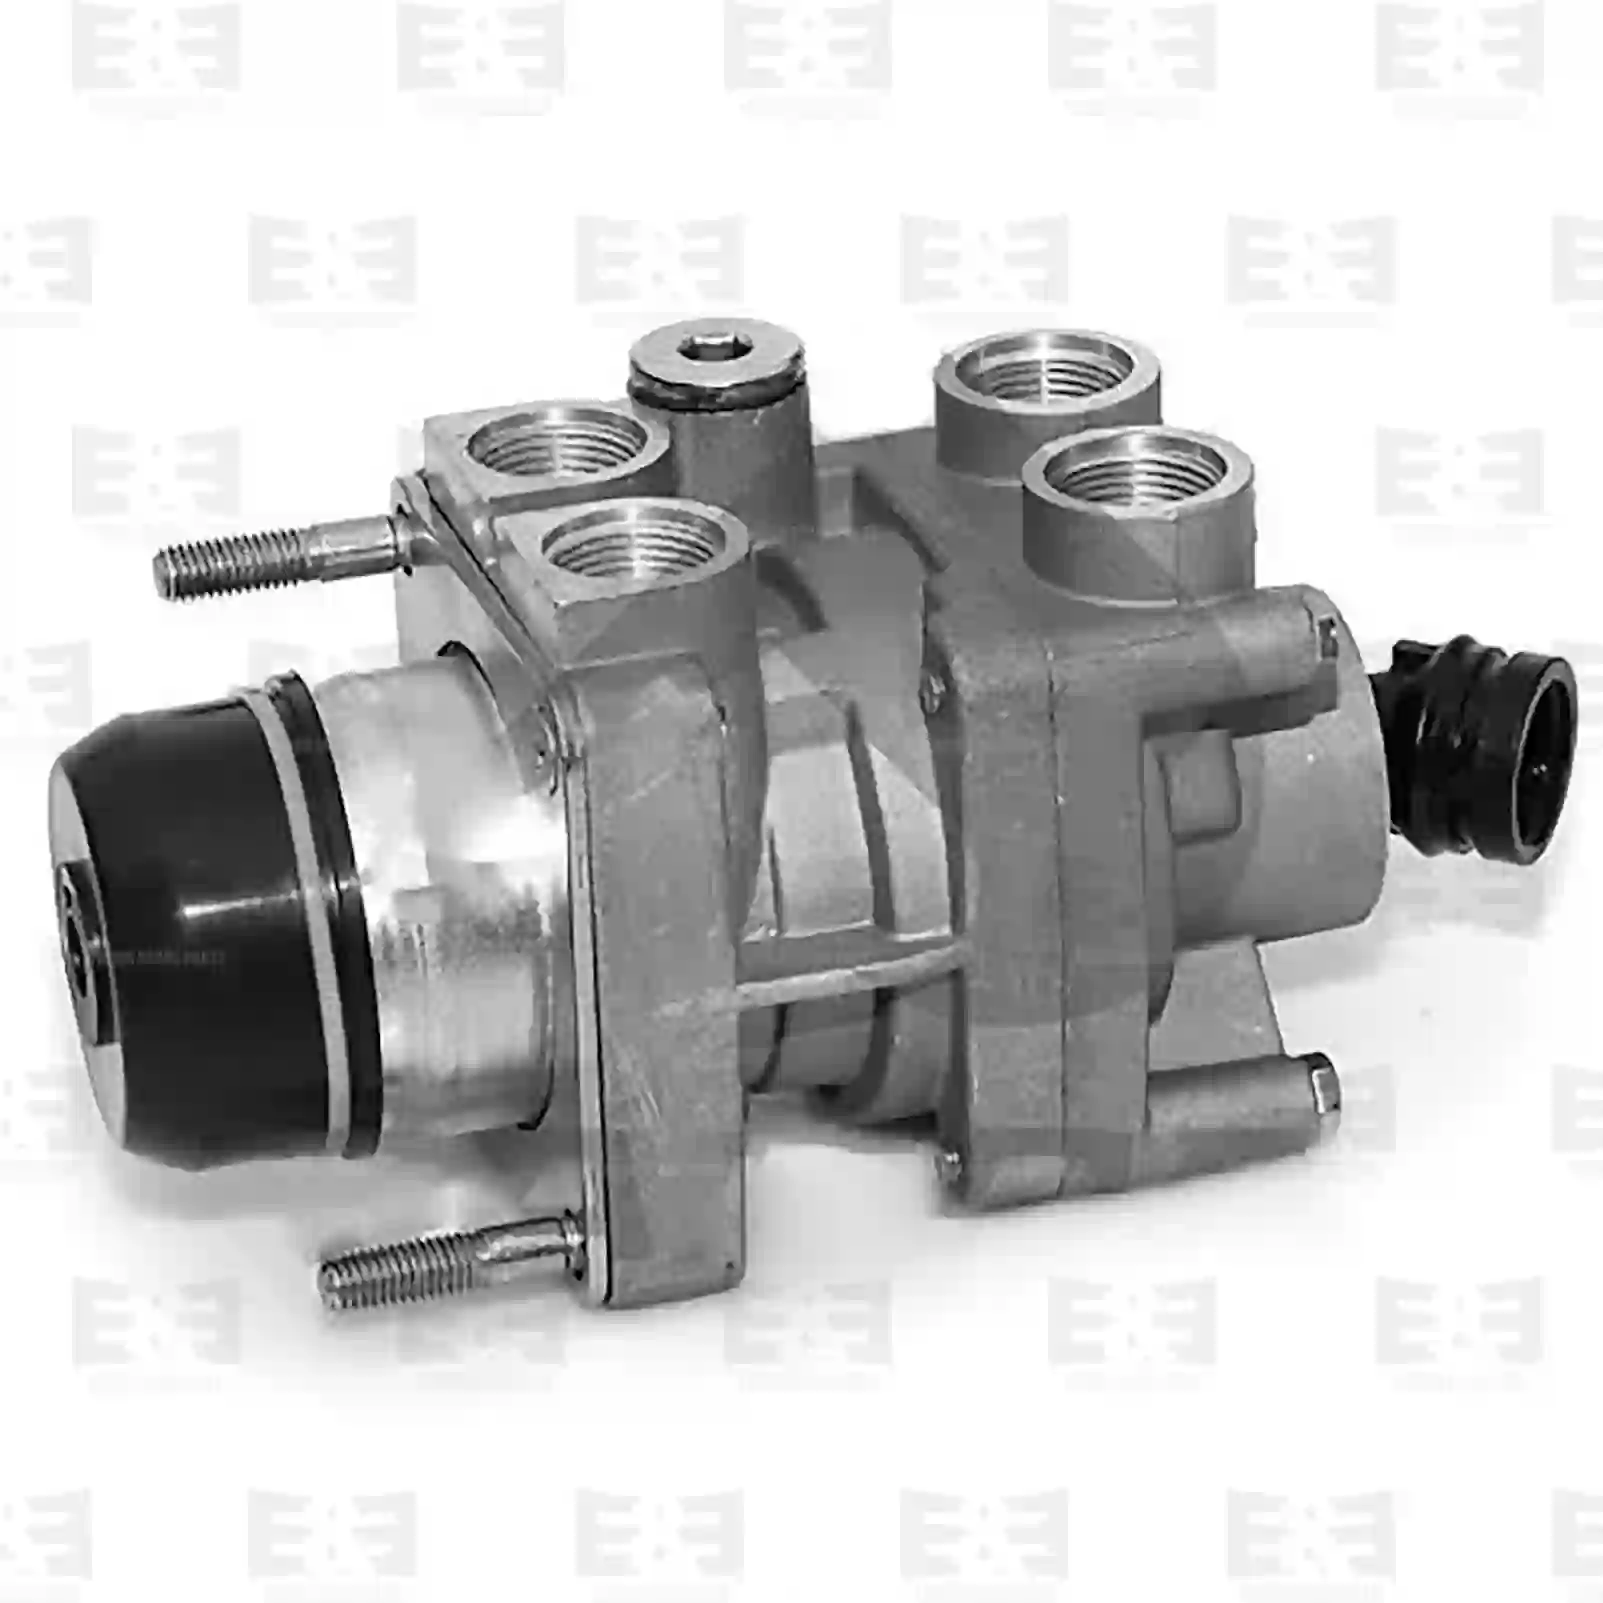  Foot brake valve || E&E Truck Spare Parts | Truck Spare Parts, Auotomotive Spare Parts